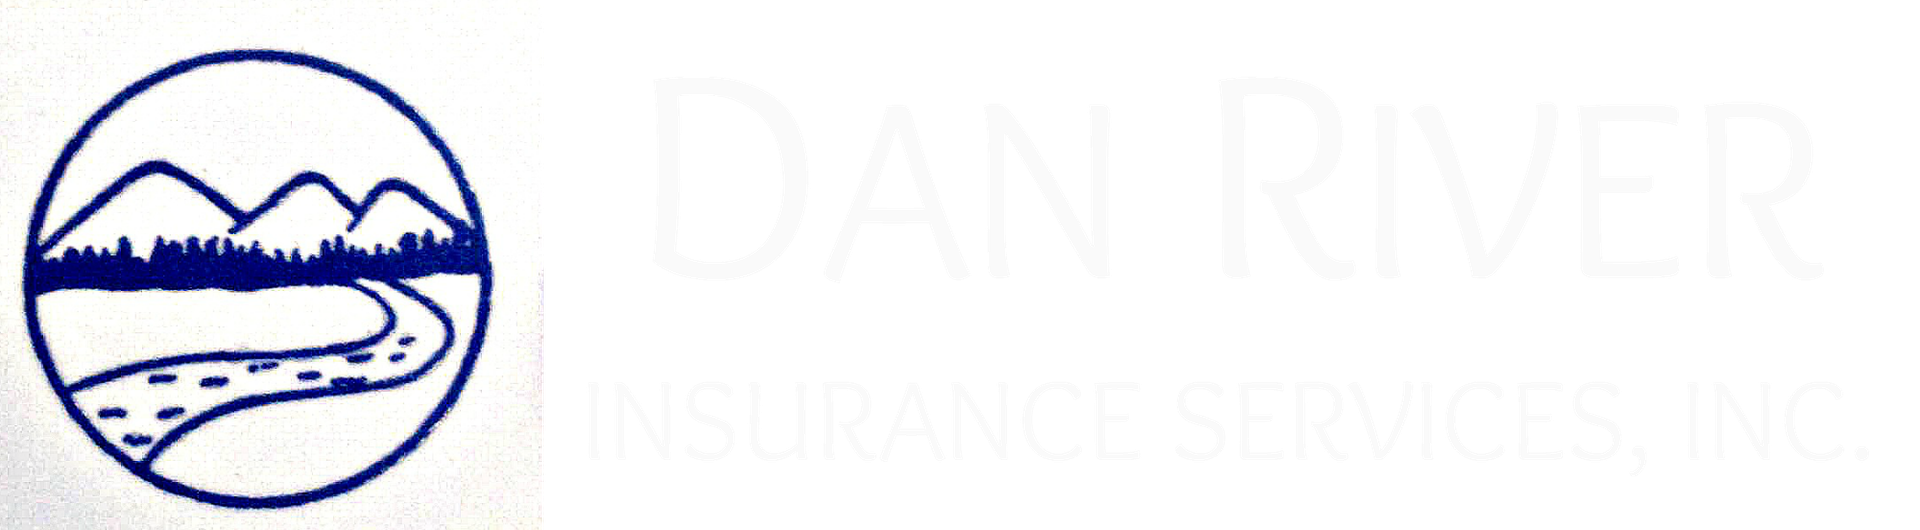 Dan River Insurance Services